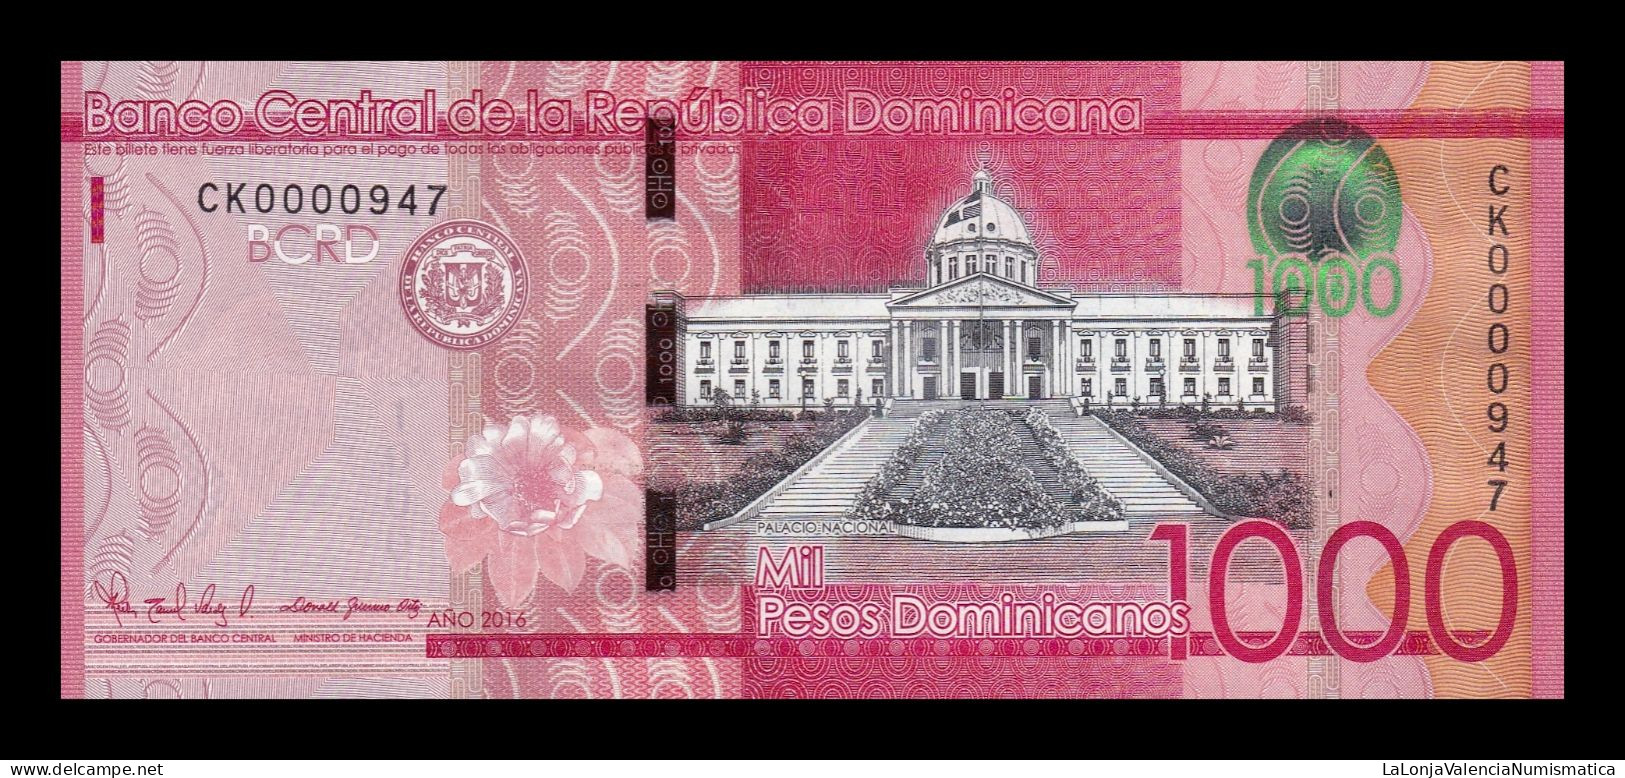 República Dominicana 1000 Pesos Dominicanos 2016 Pick 193c Low Serial 947 Sc Unc - Repubblica Dominicana